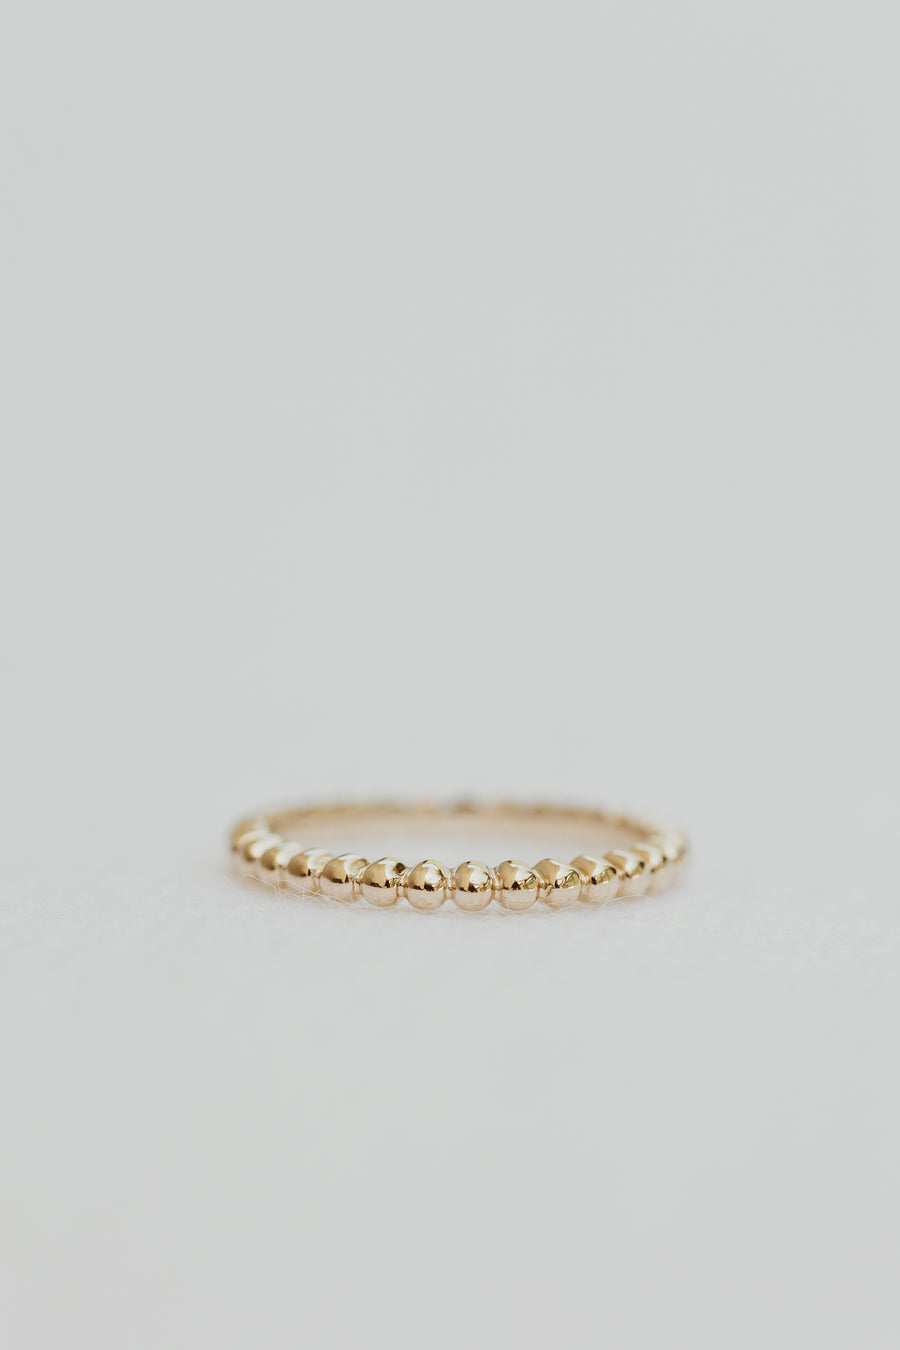 Barcelona Gold Bead Ring